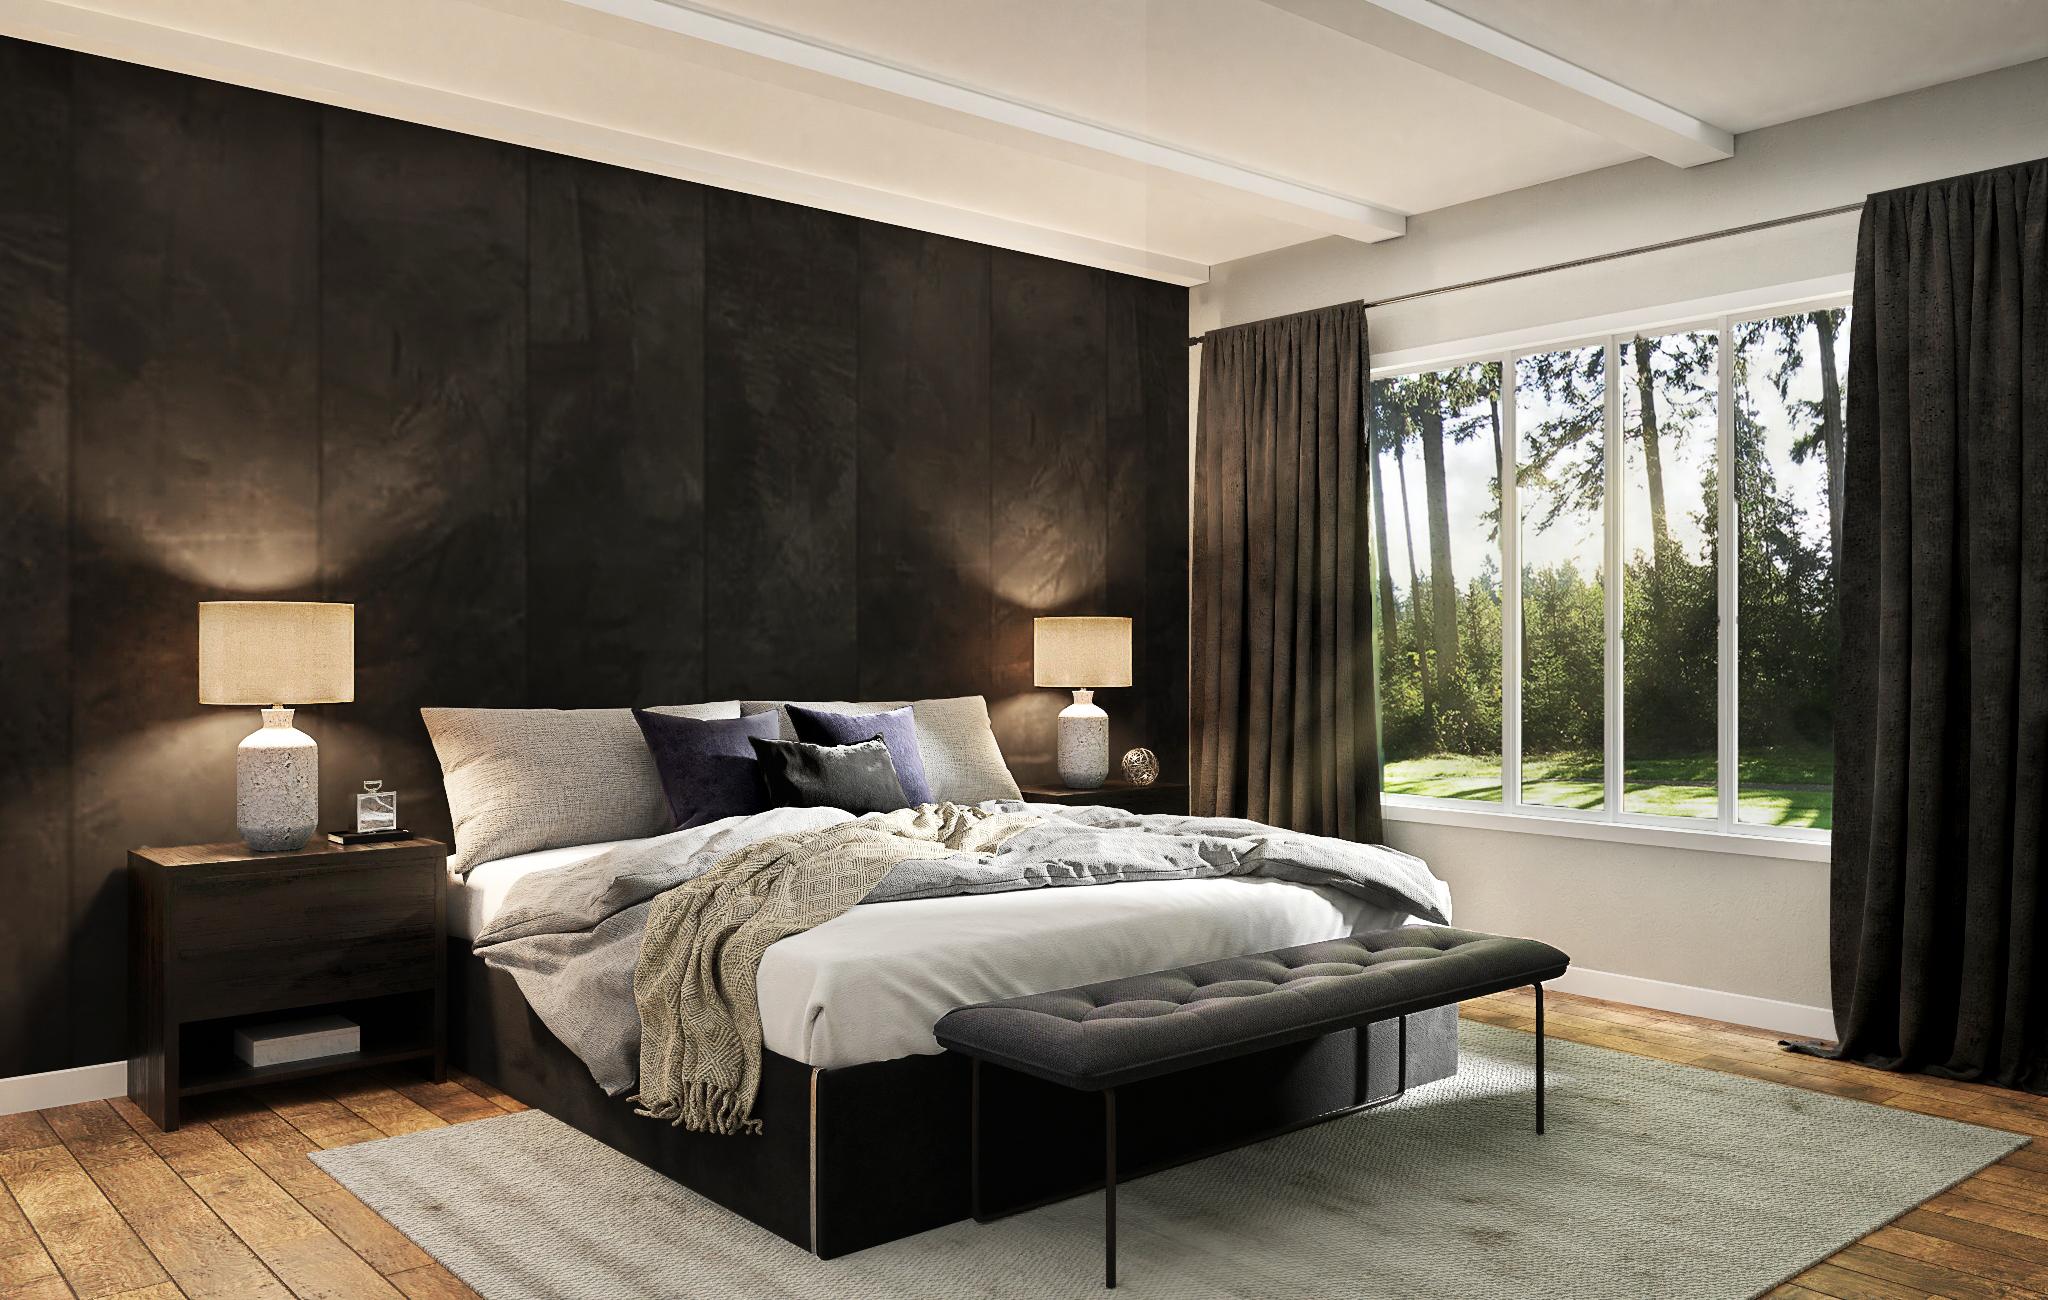 A Romantic Modern Minimalistic Bedroom